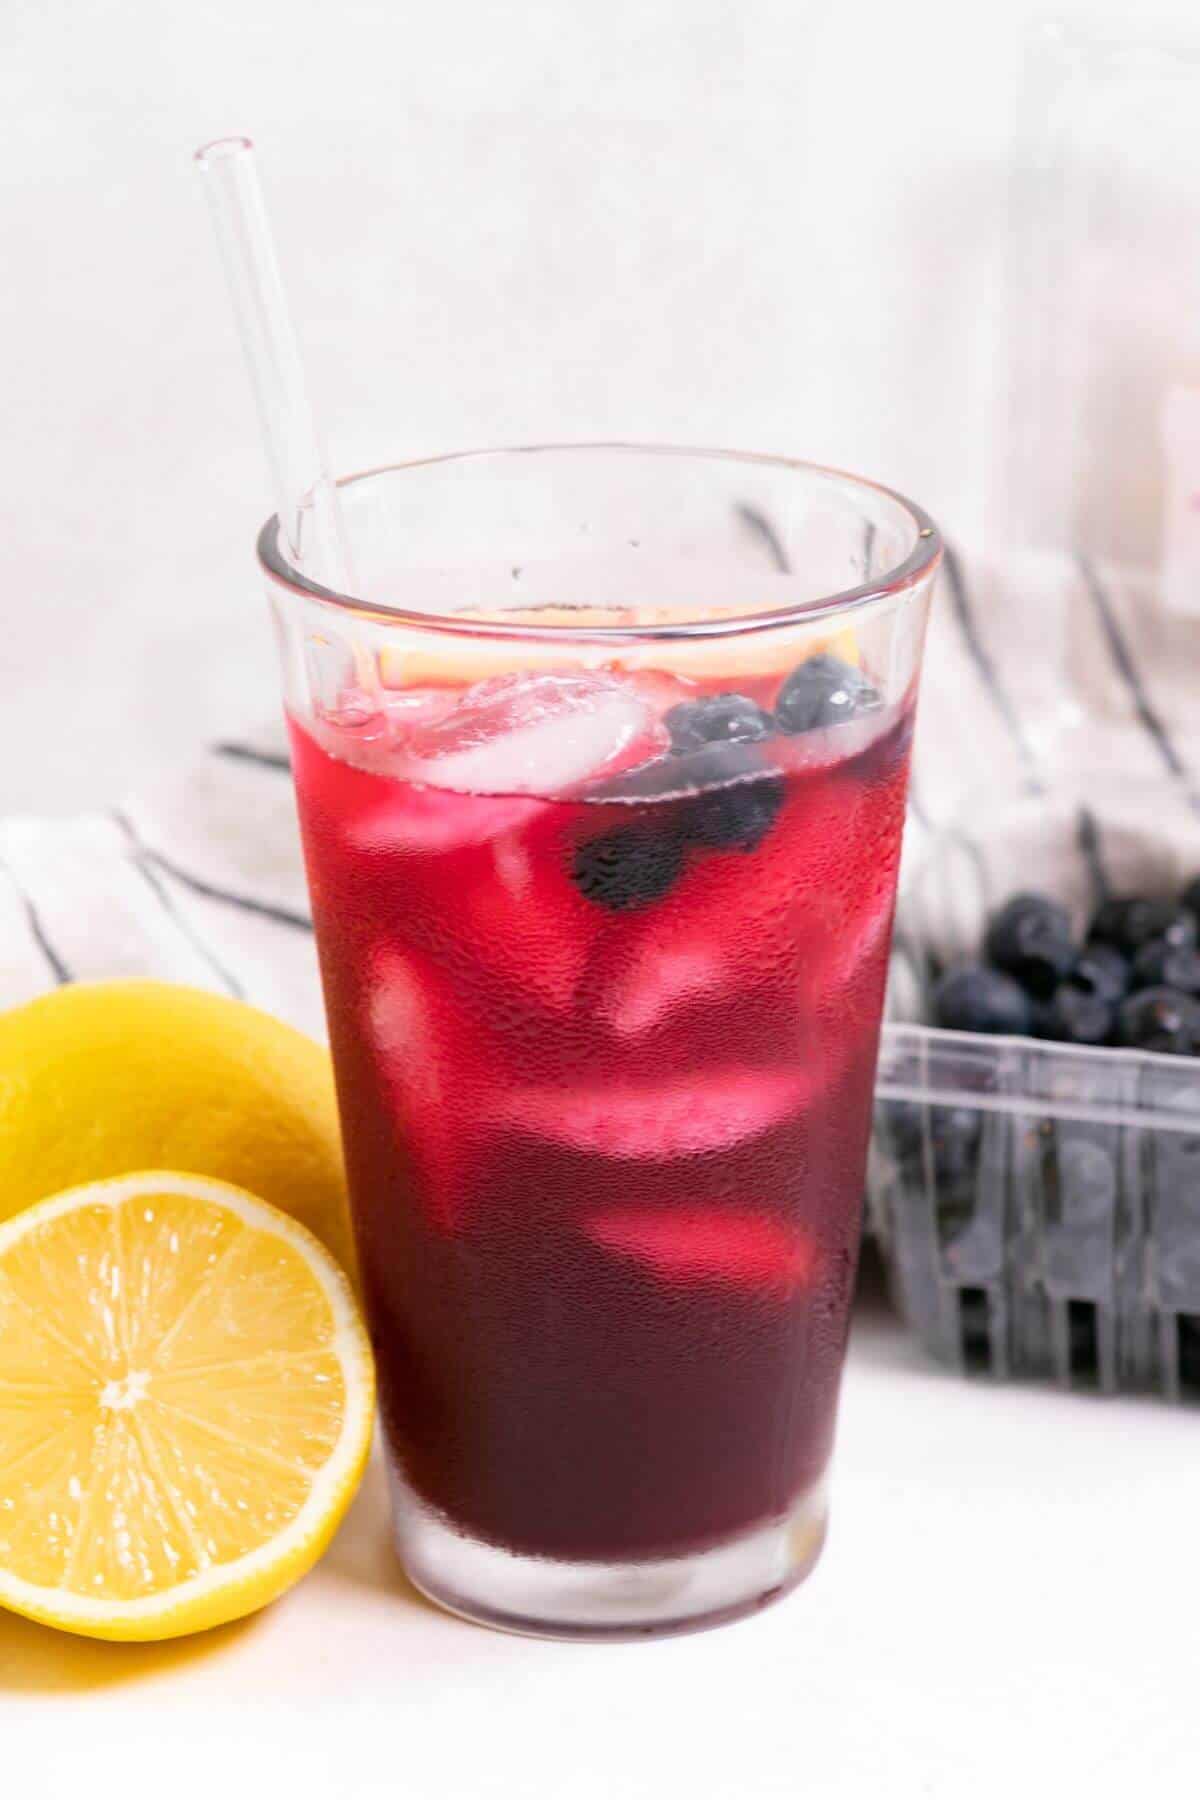 Blueberry vodka lemonade with sliced lemon and a pint of blueberries.